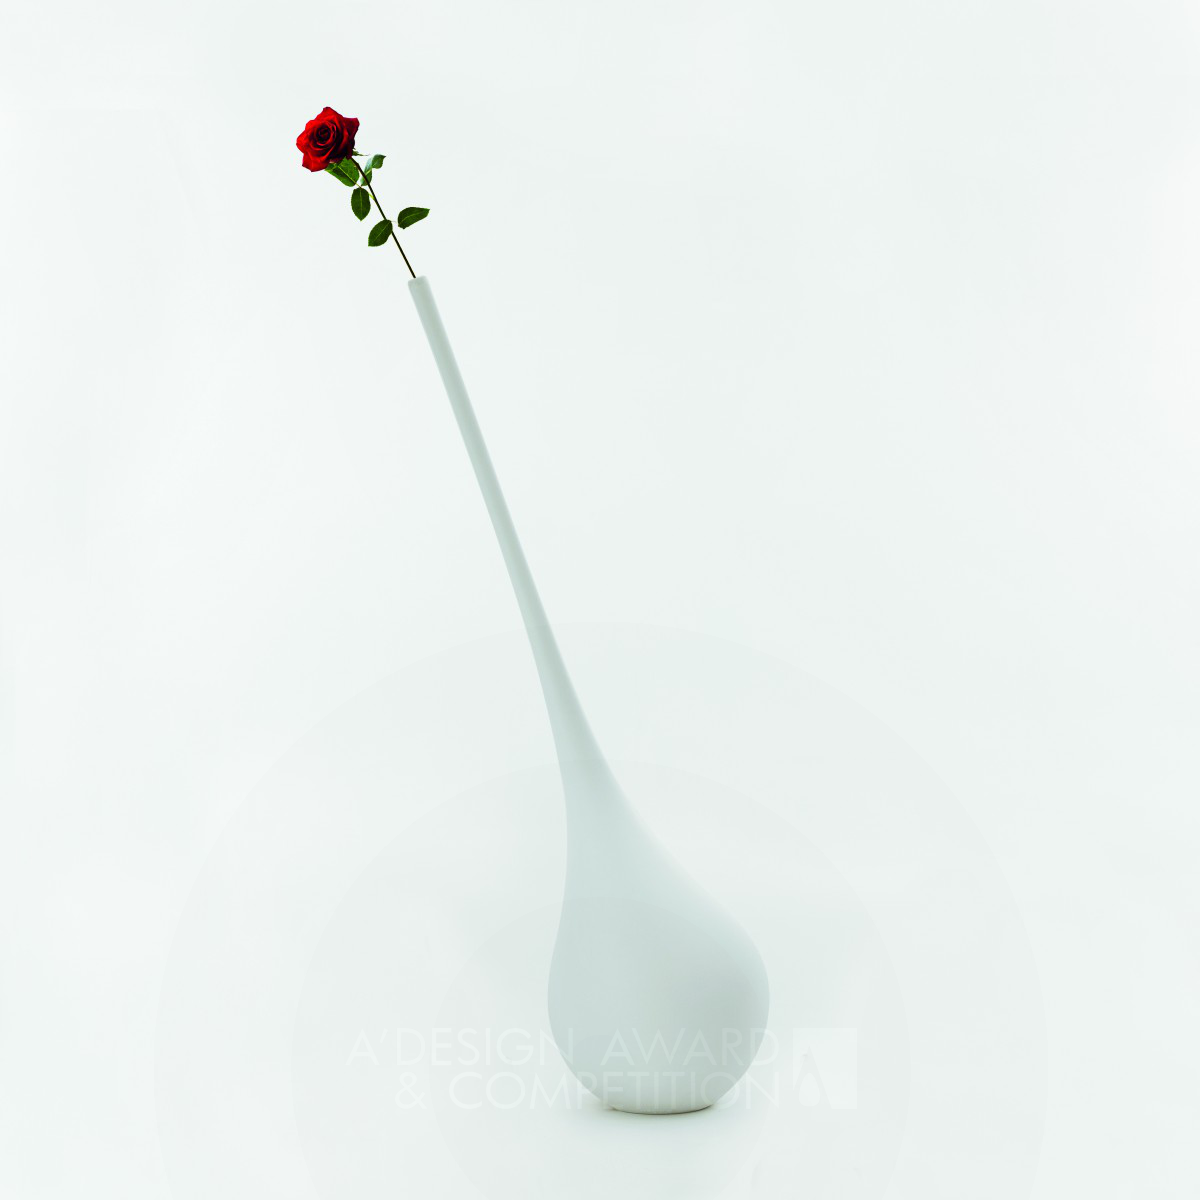 Ampoule Illuminated vase by Federico Traverso